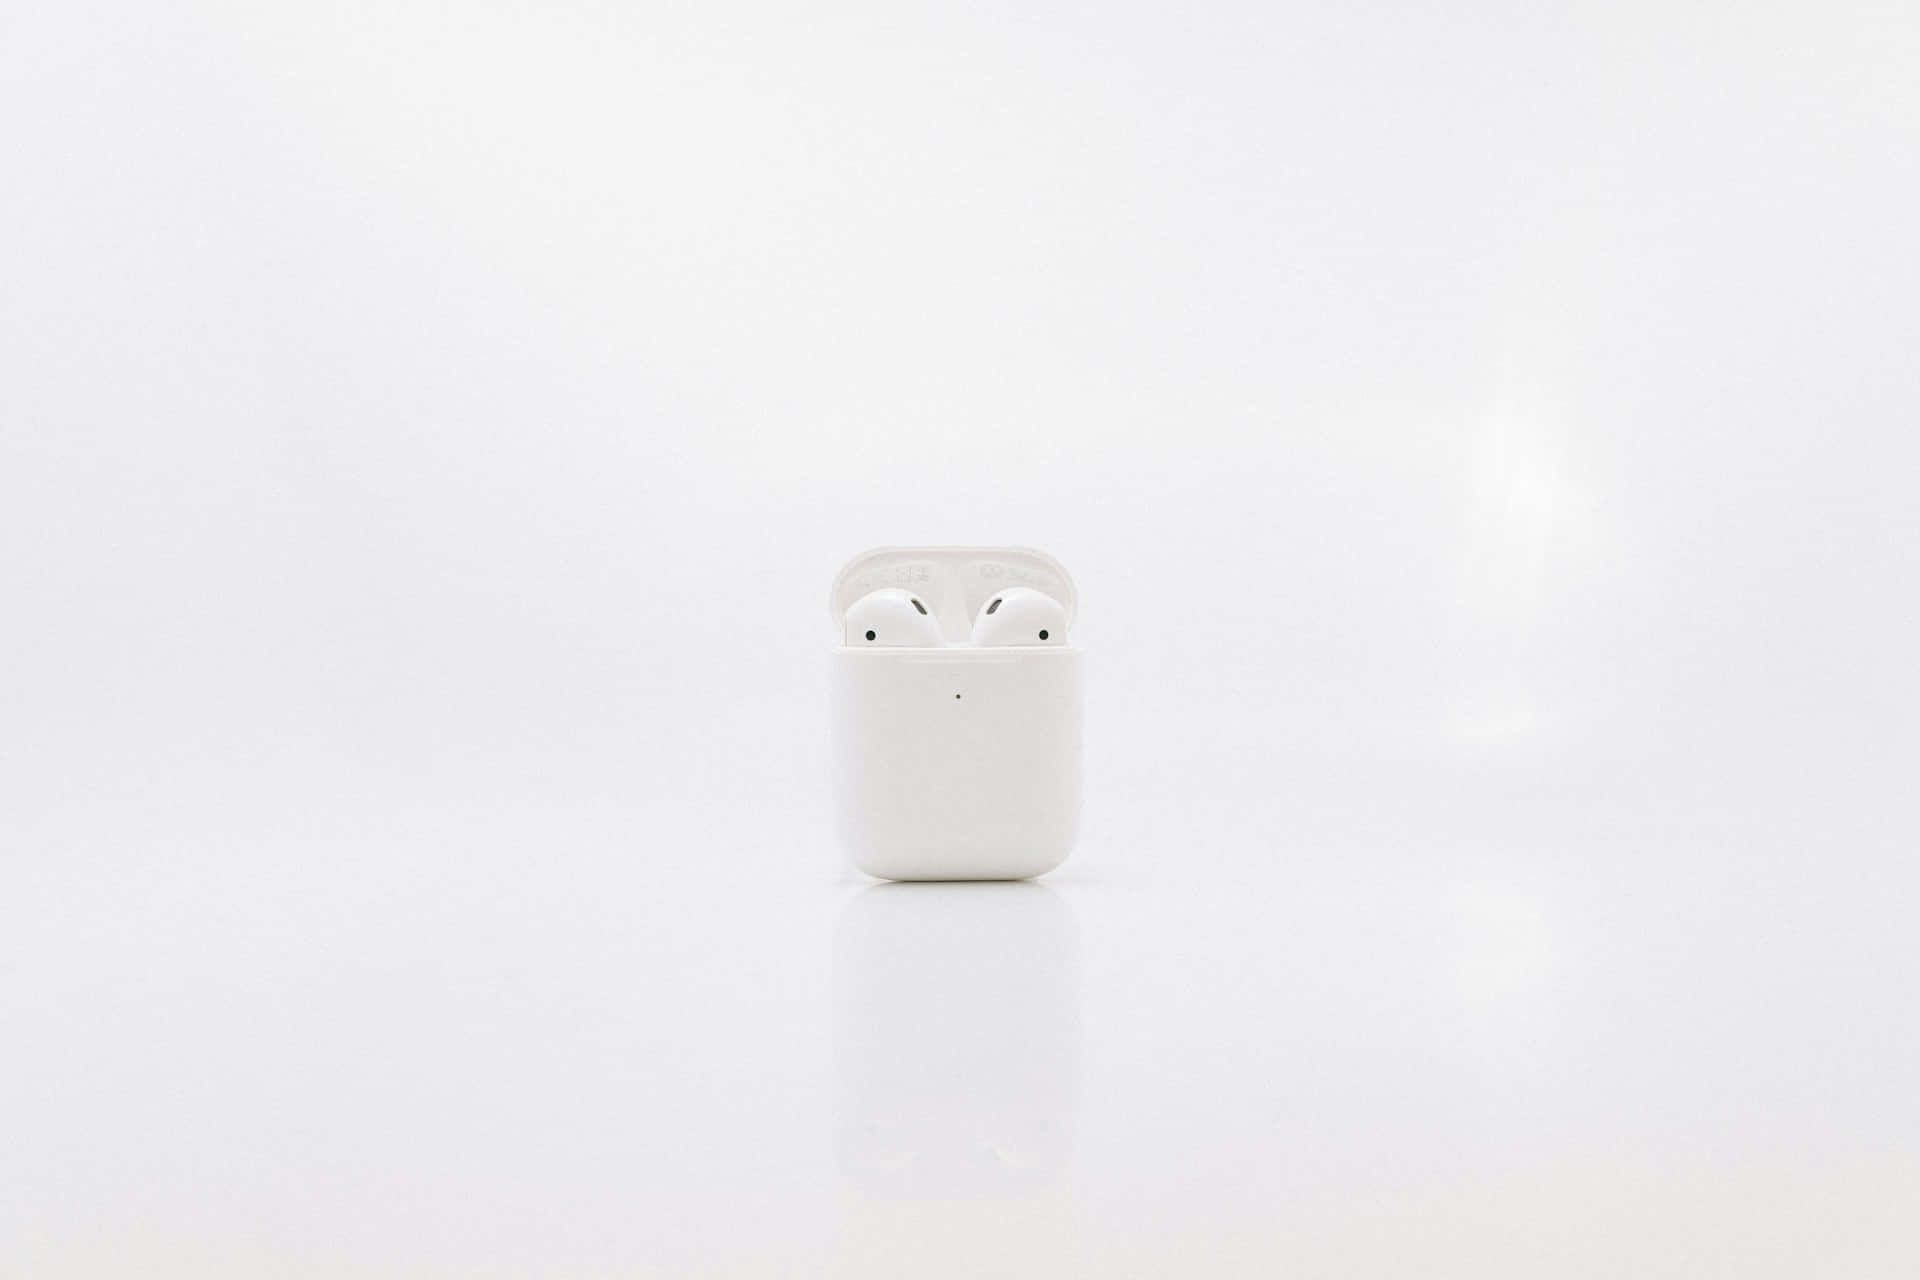 Minimalist White Wireless Earbuds Wallpaper